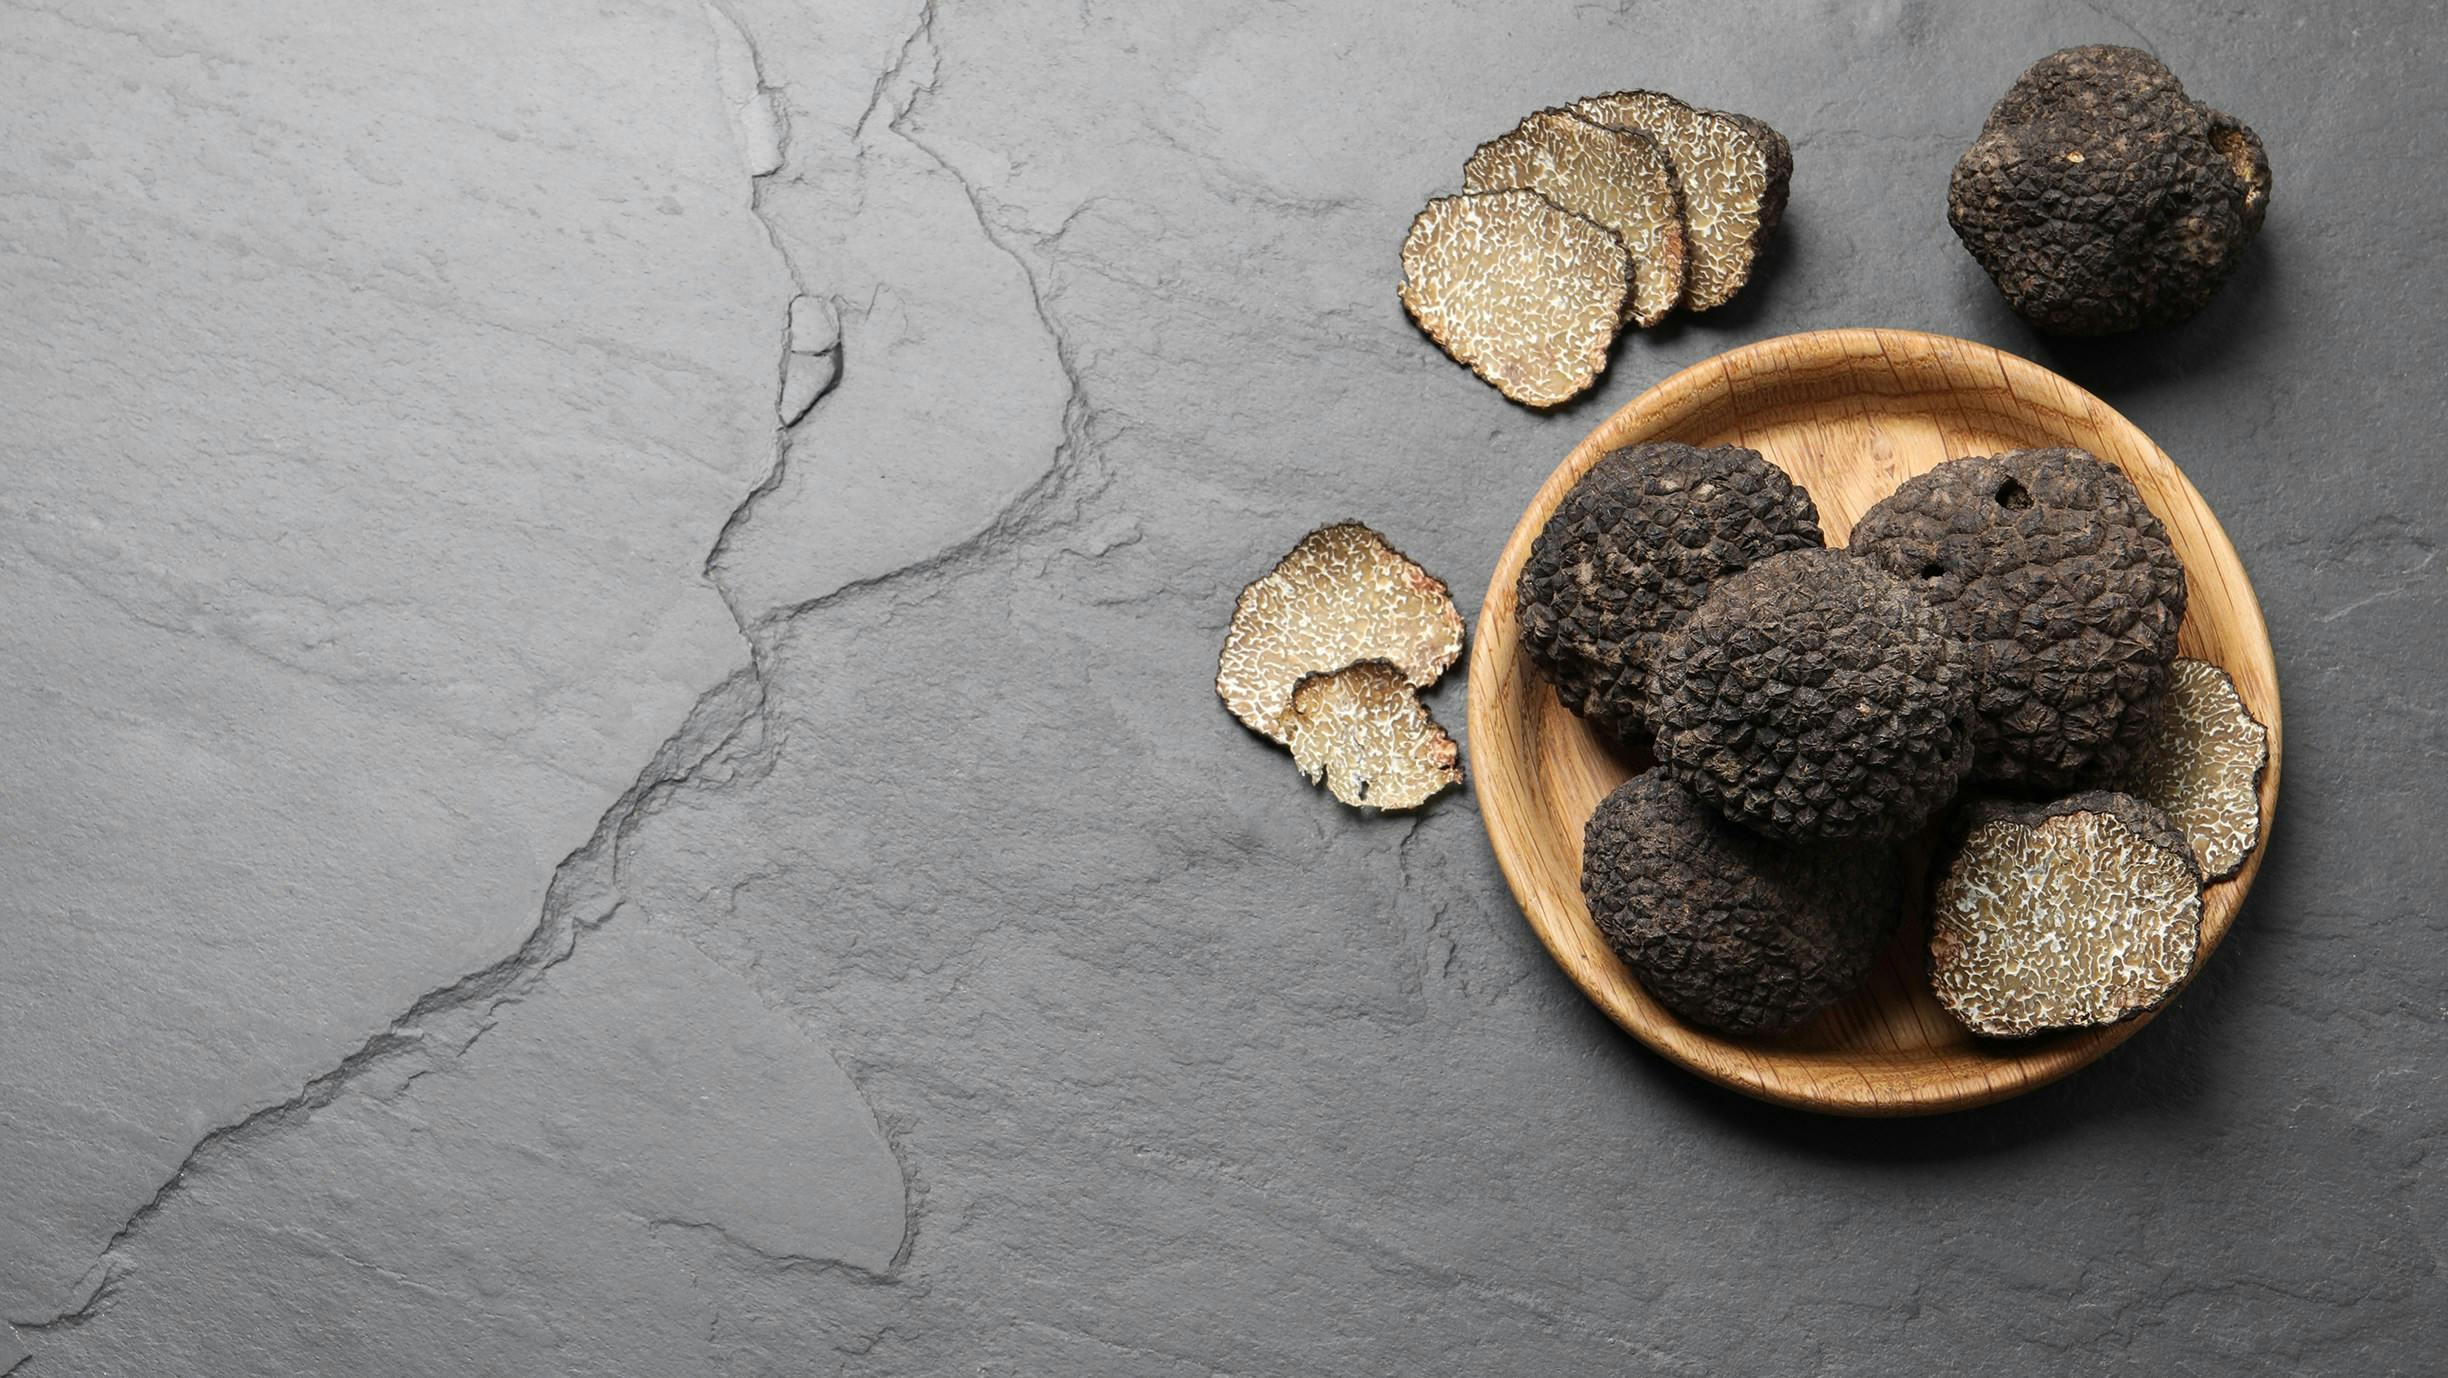 Flavore truffle dinner